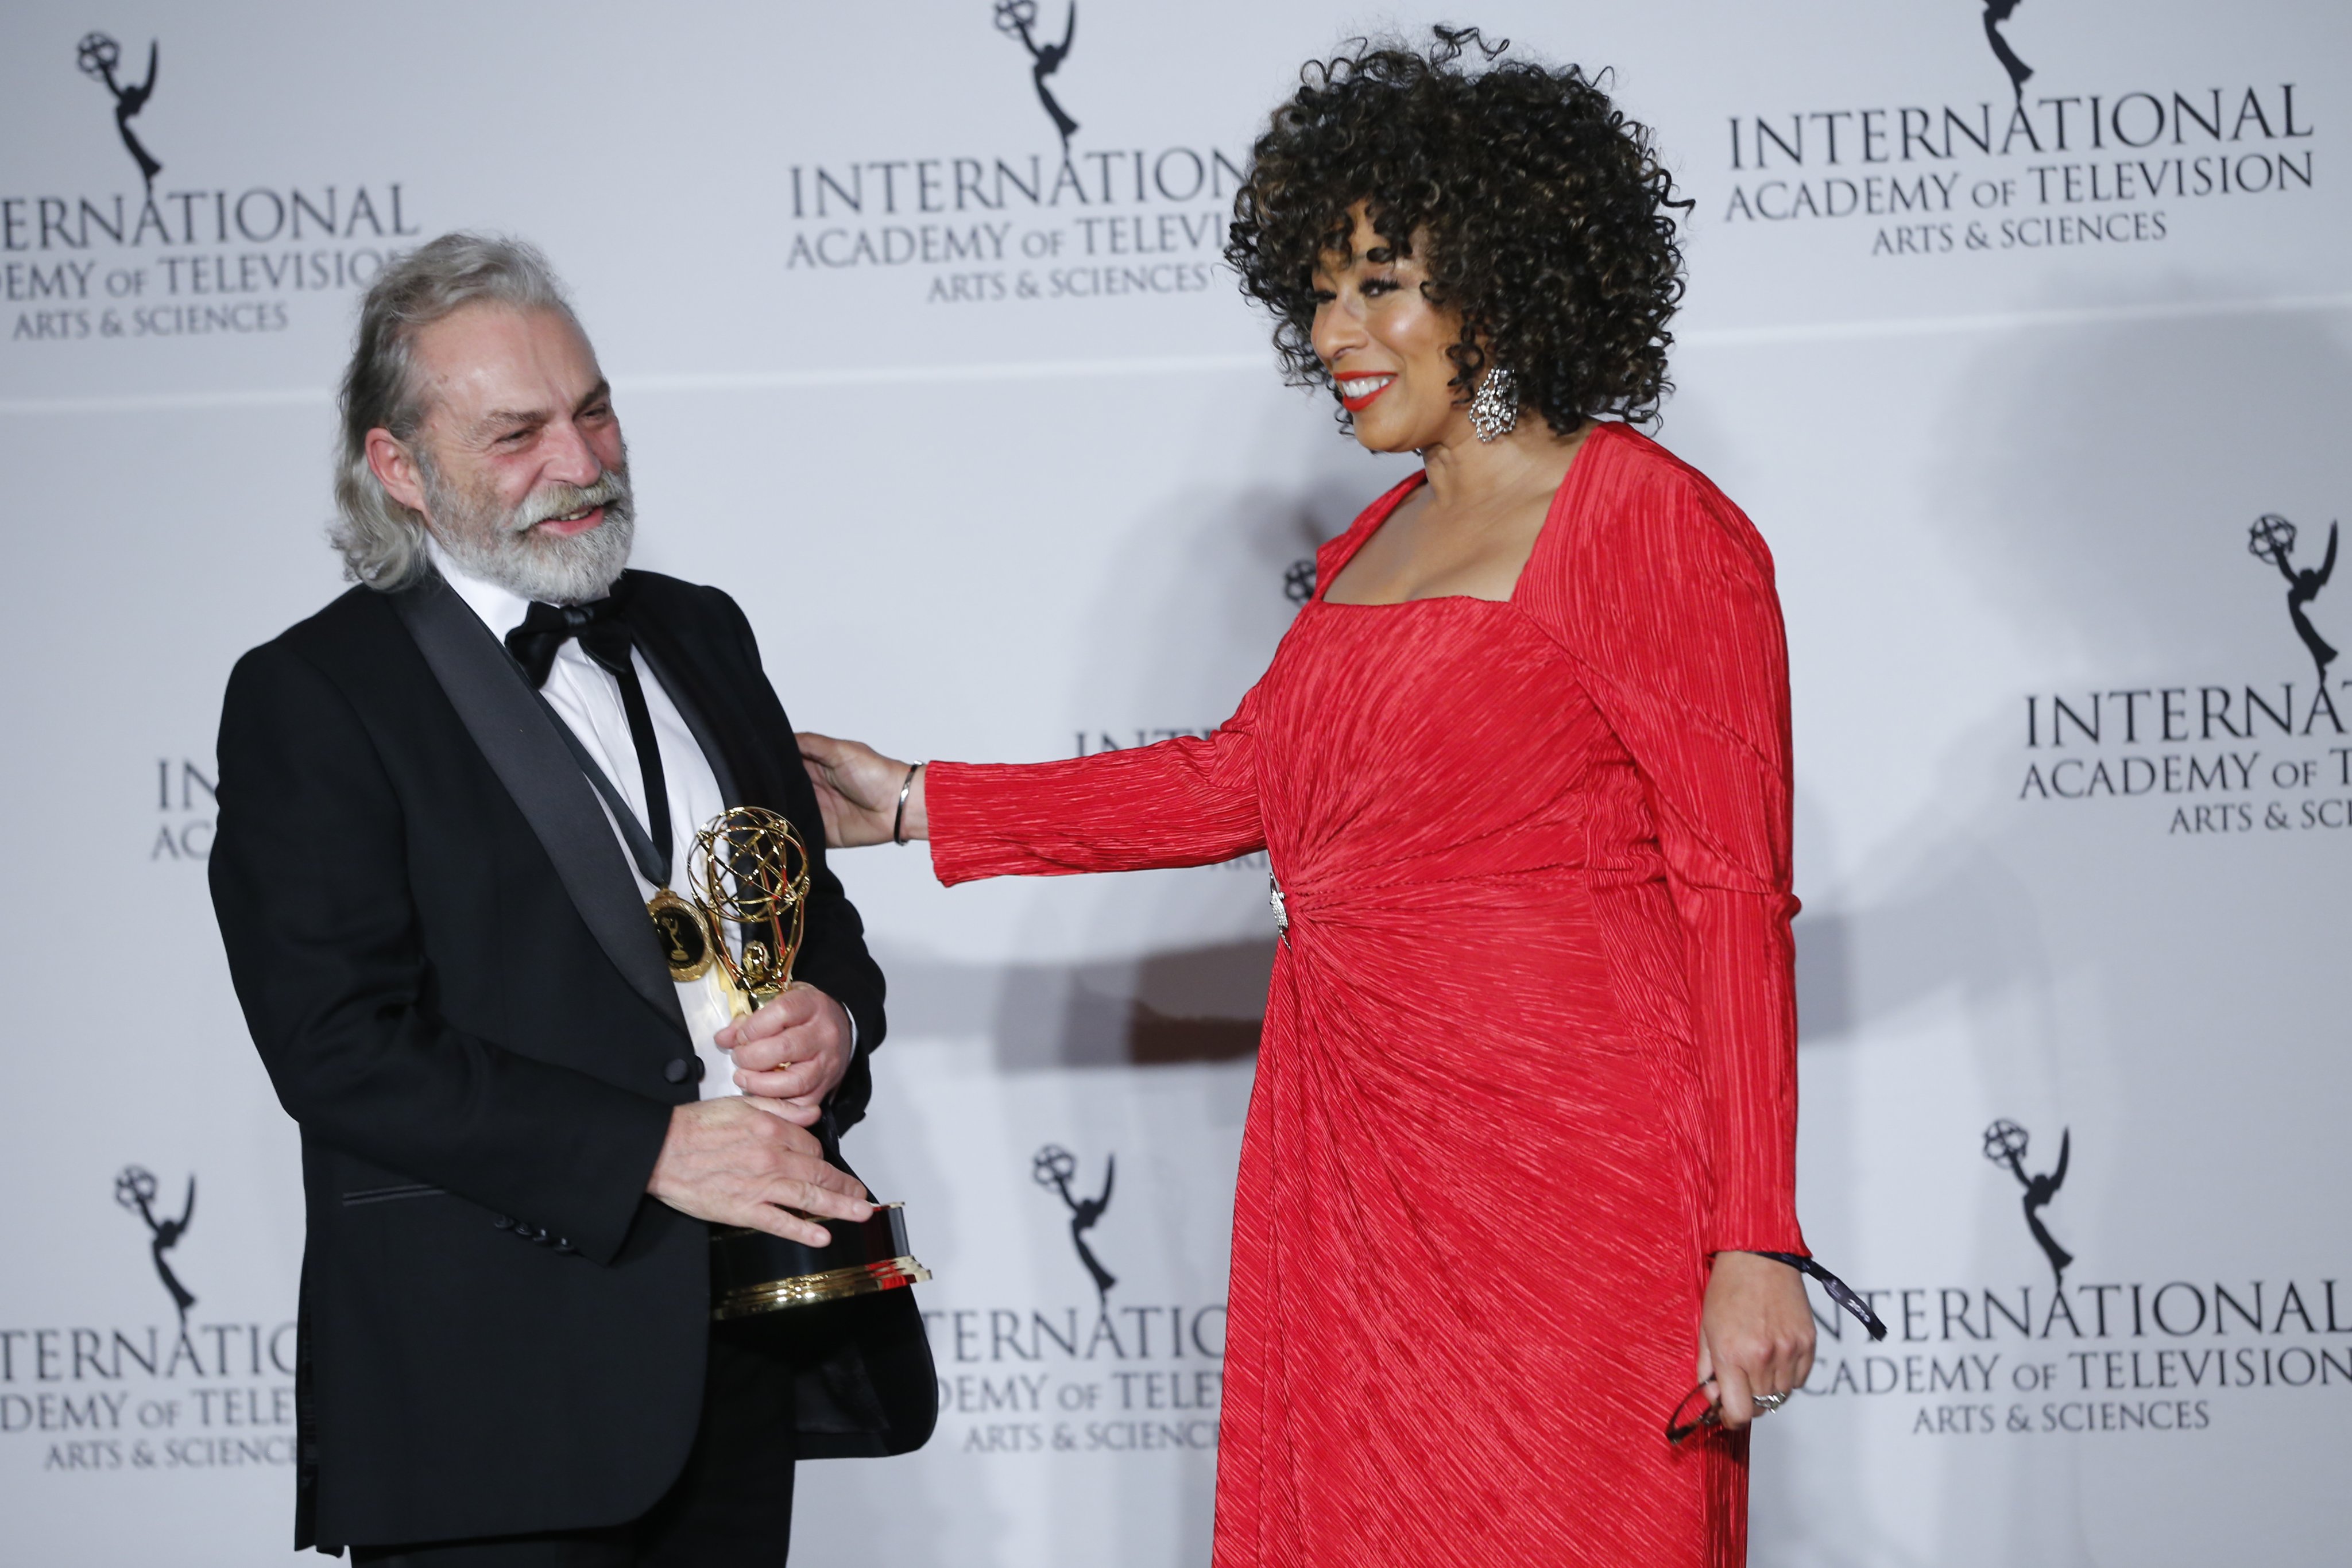 Turkish Actor Haluk Bilginer wins International Emmy® Award for 'Best Actor'